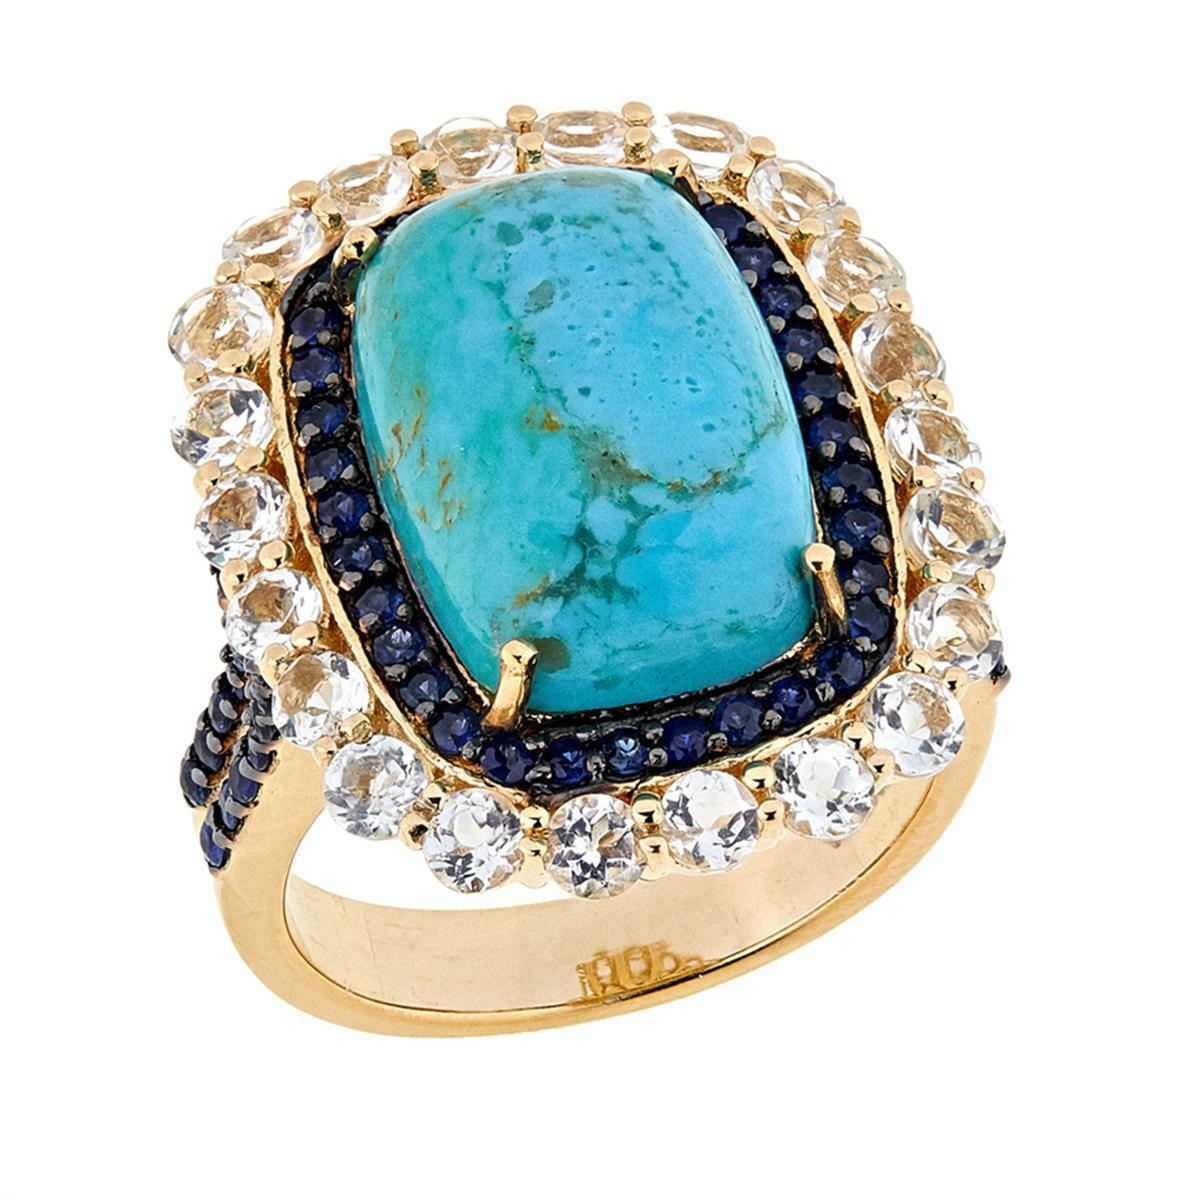 Paul Deasy Gem Kingman Turquoise, Sapphire And White Topaz Ring Size 5 Hsn $260